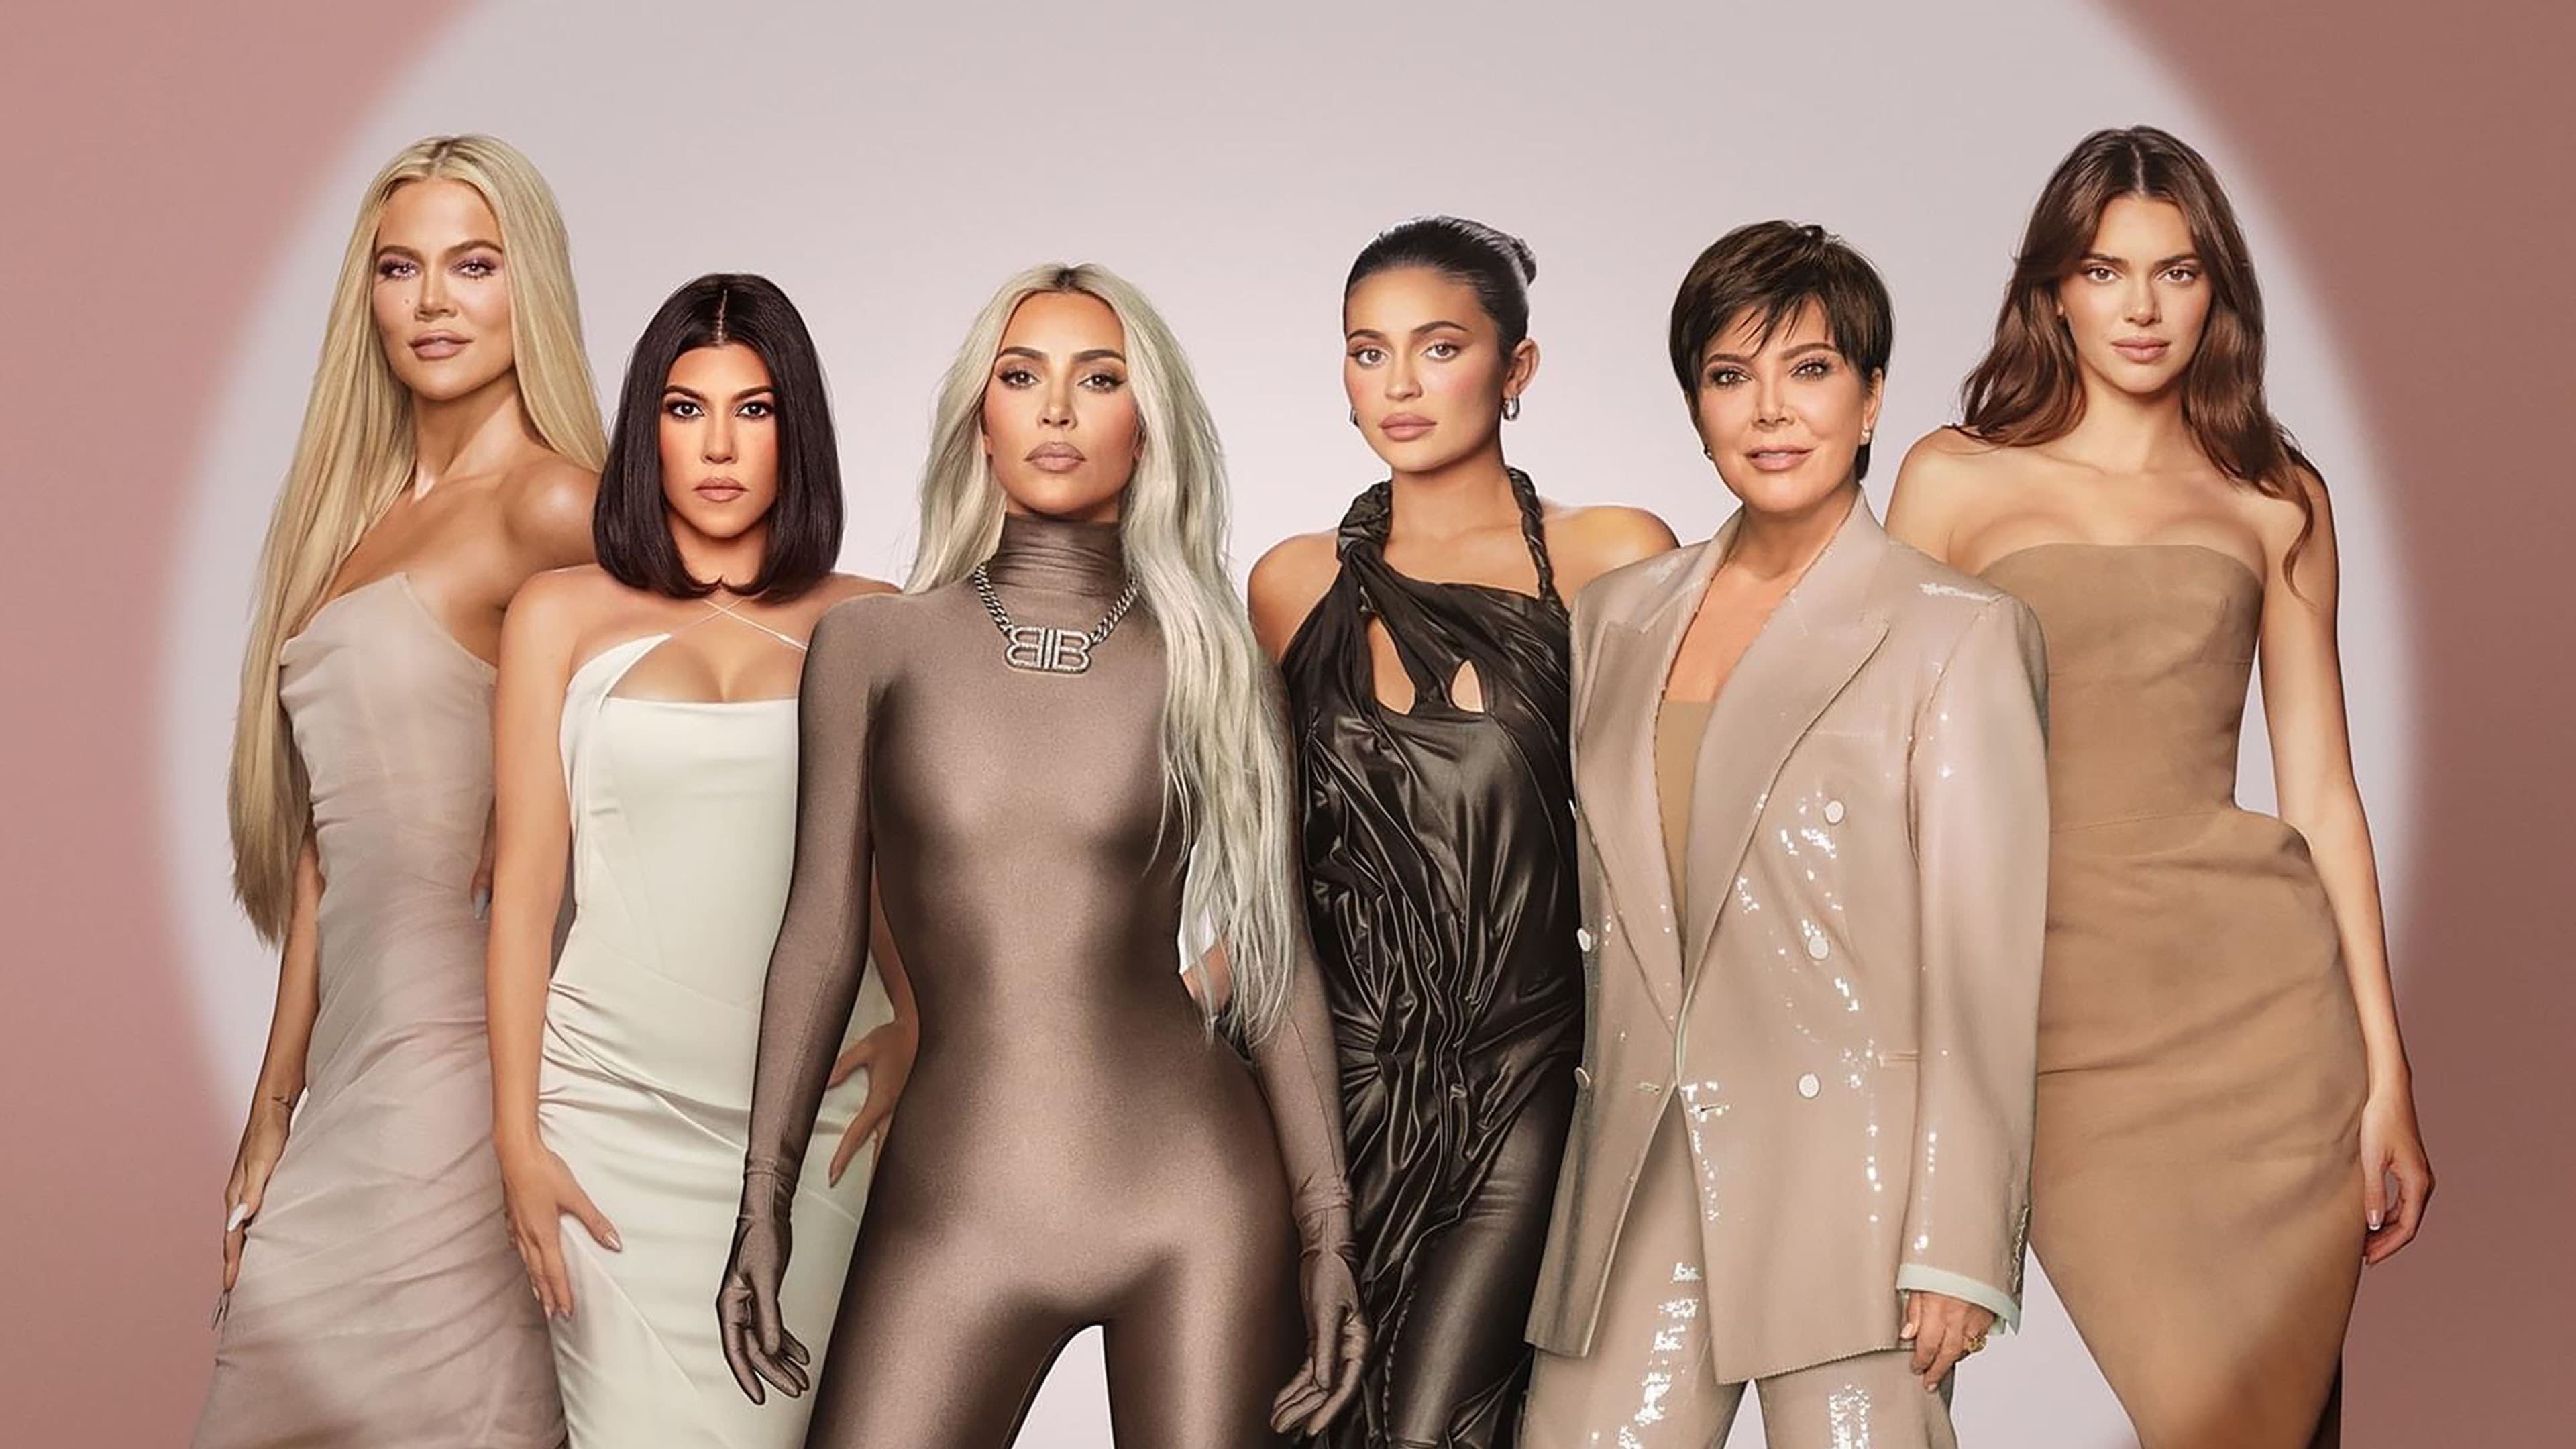 The Kardashians - Season 1 Episode 7